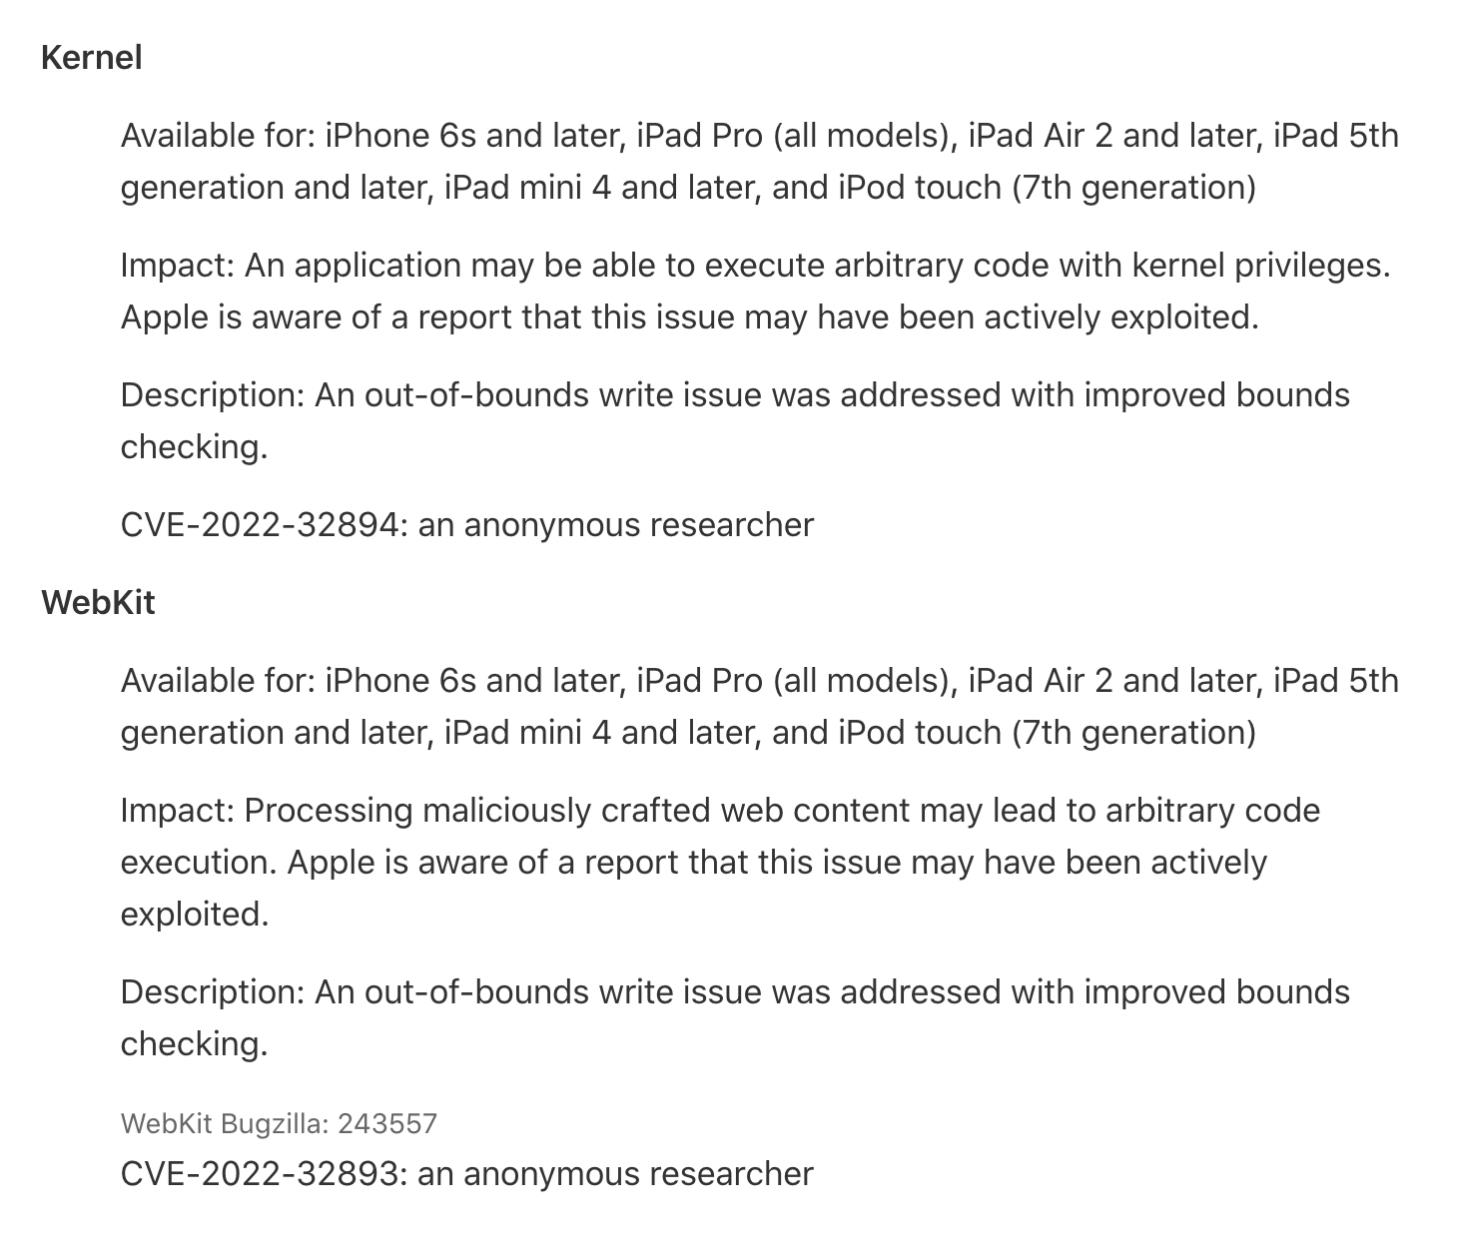 apple security update closes macs